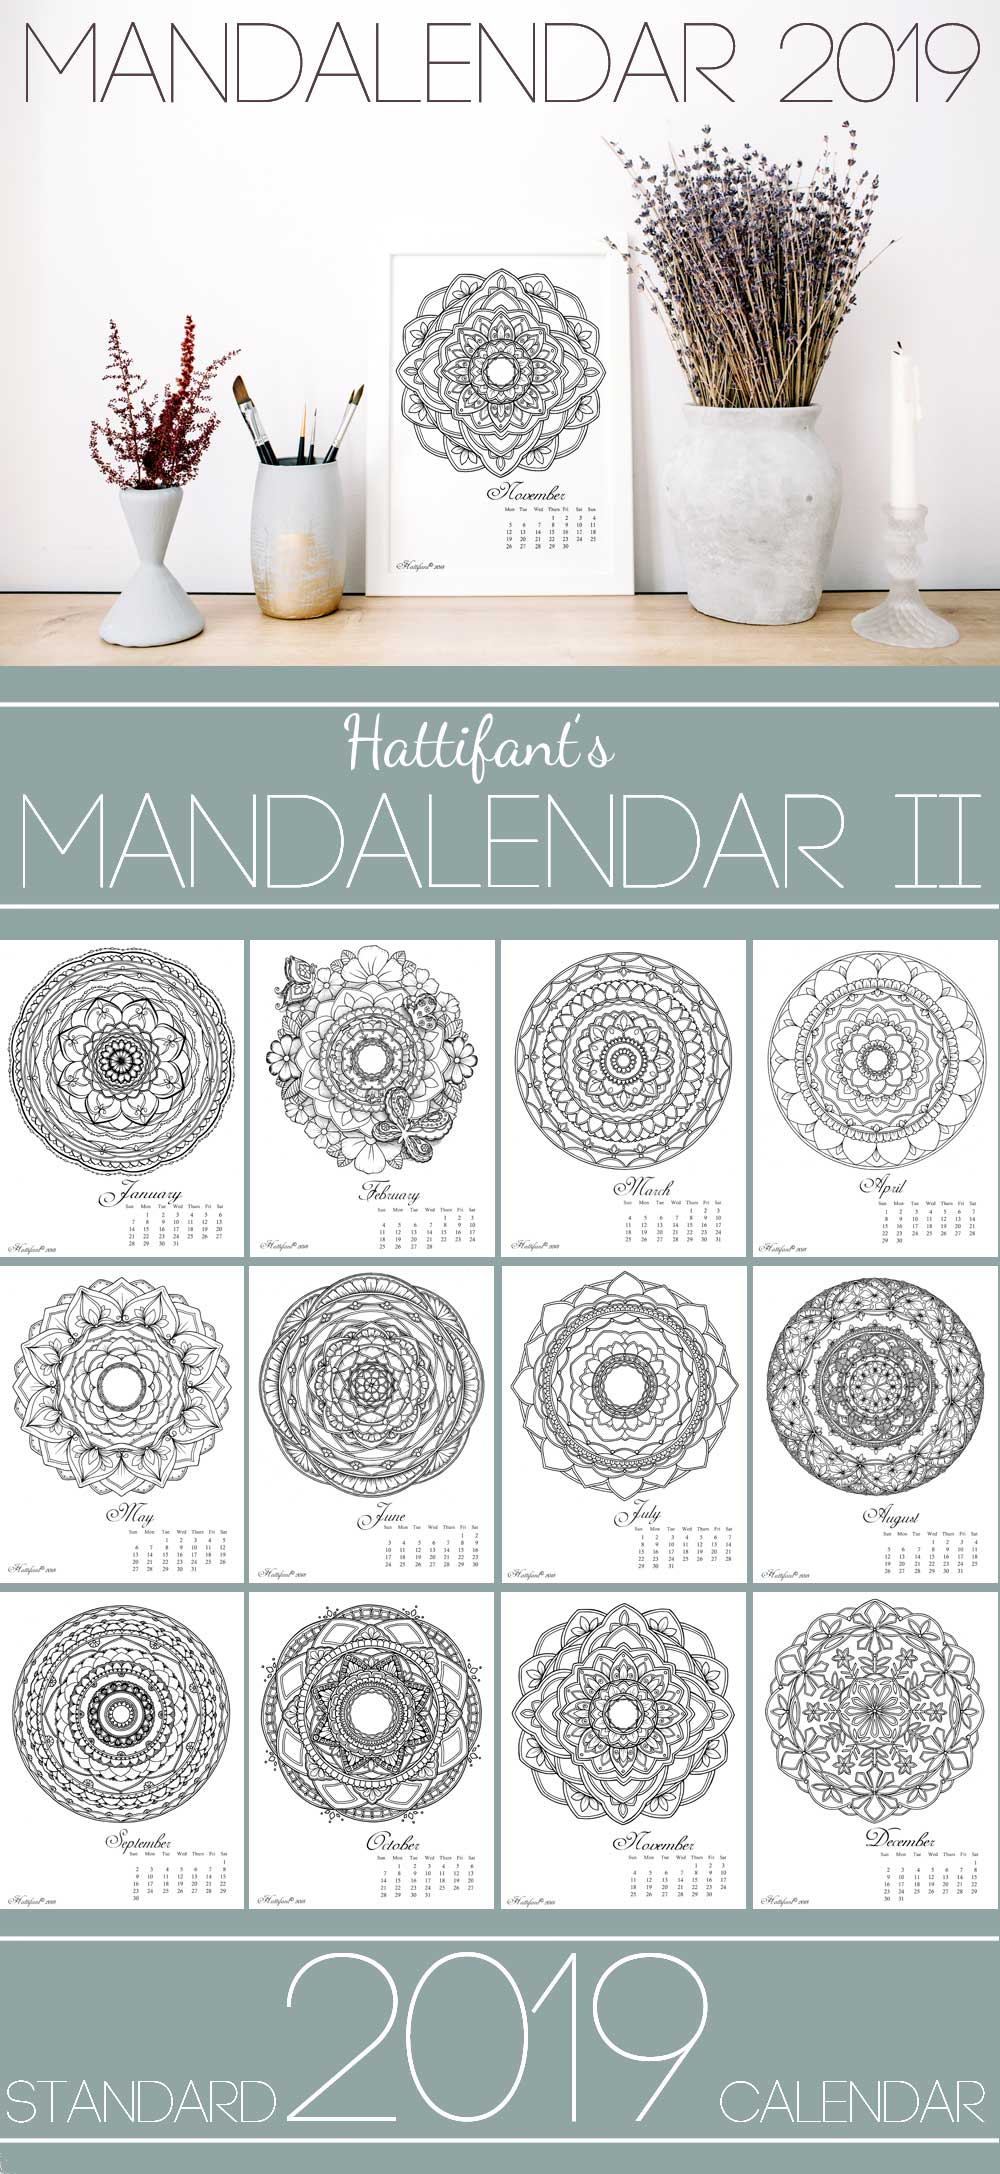 Hattifant's Mandalendar 2019 a Mandala Calendar to Color Standard 2